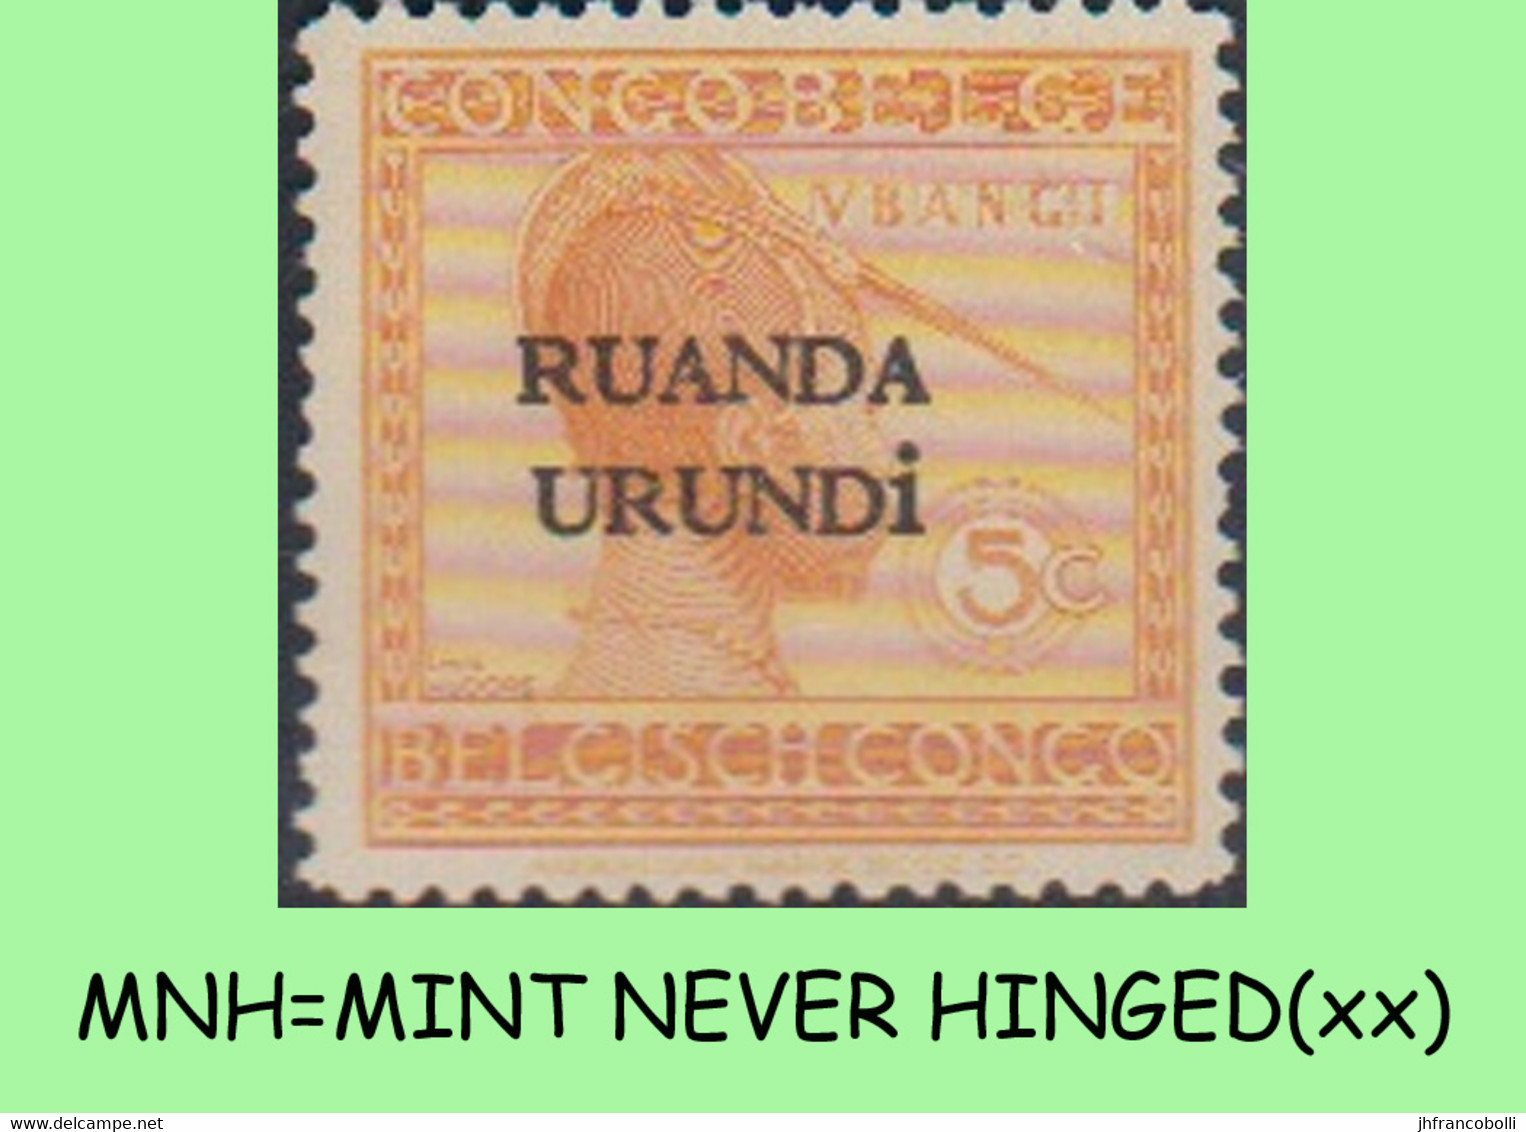 1924 ** RUANDA-URUNDI RU 050/060 MNH VLOORS -1- ( x 11 stamps )